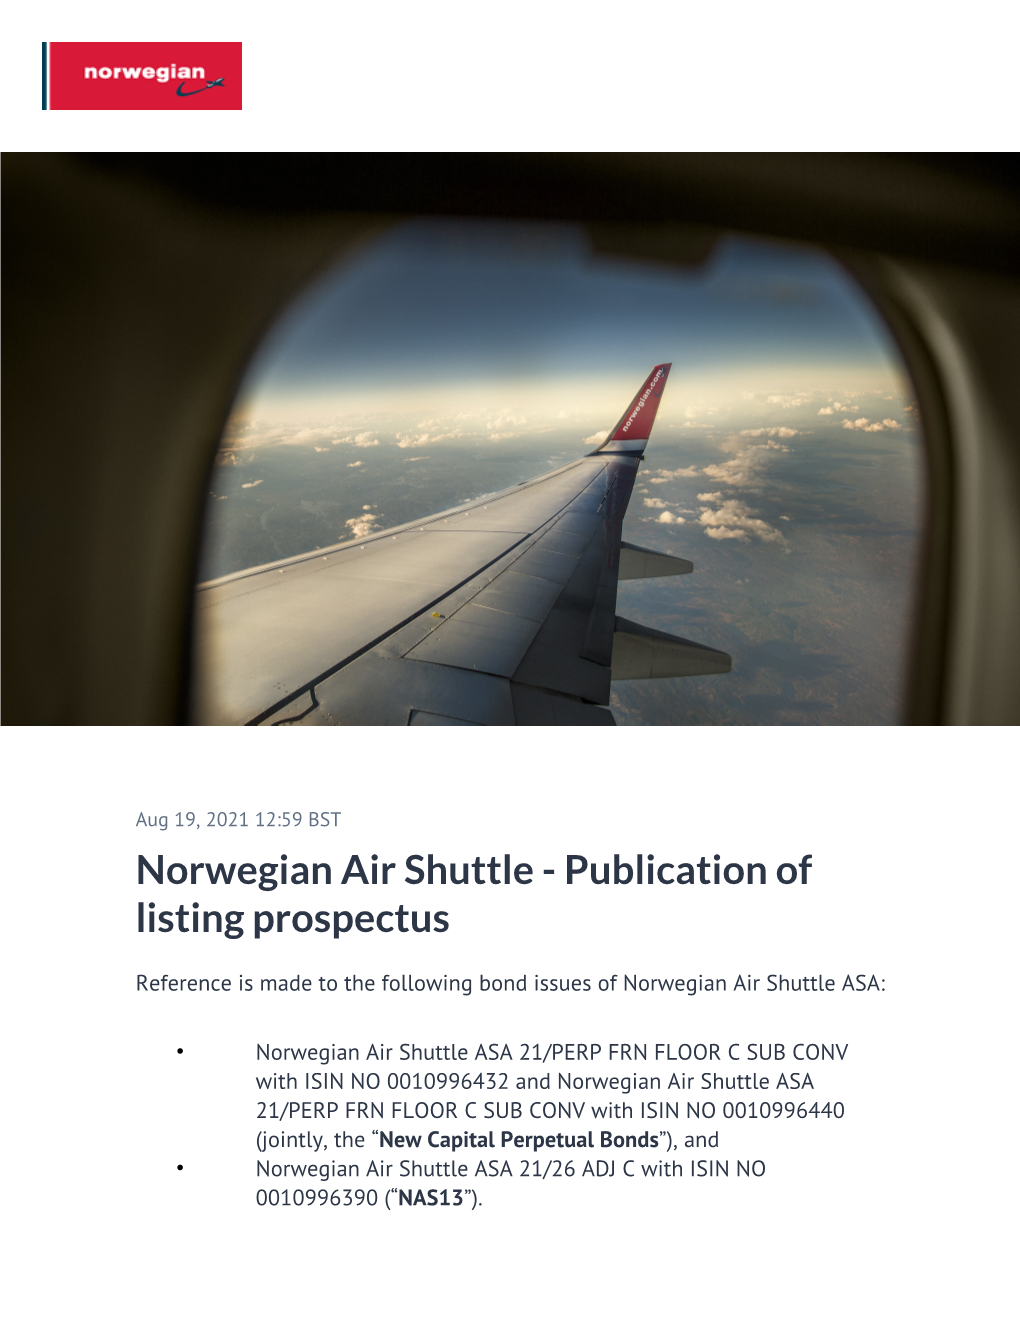 Norwegian Air Shuttle - Publication of Listing Prospectus